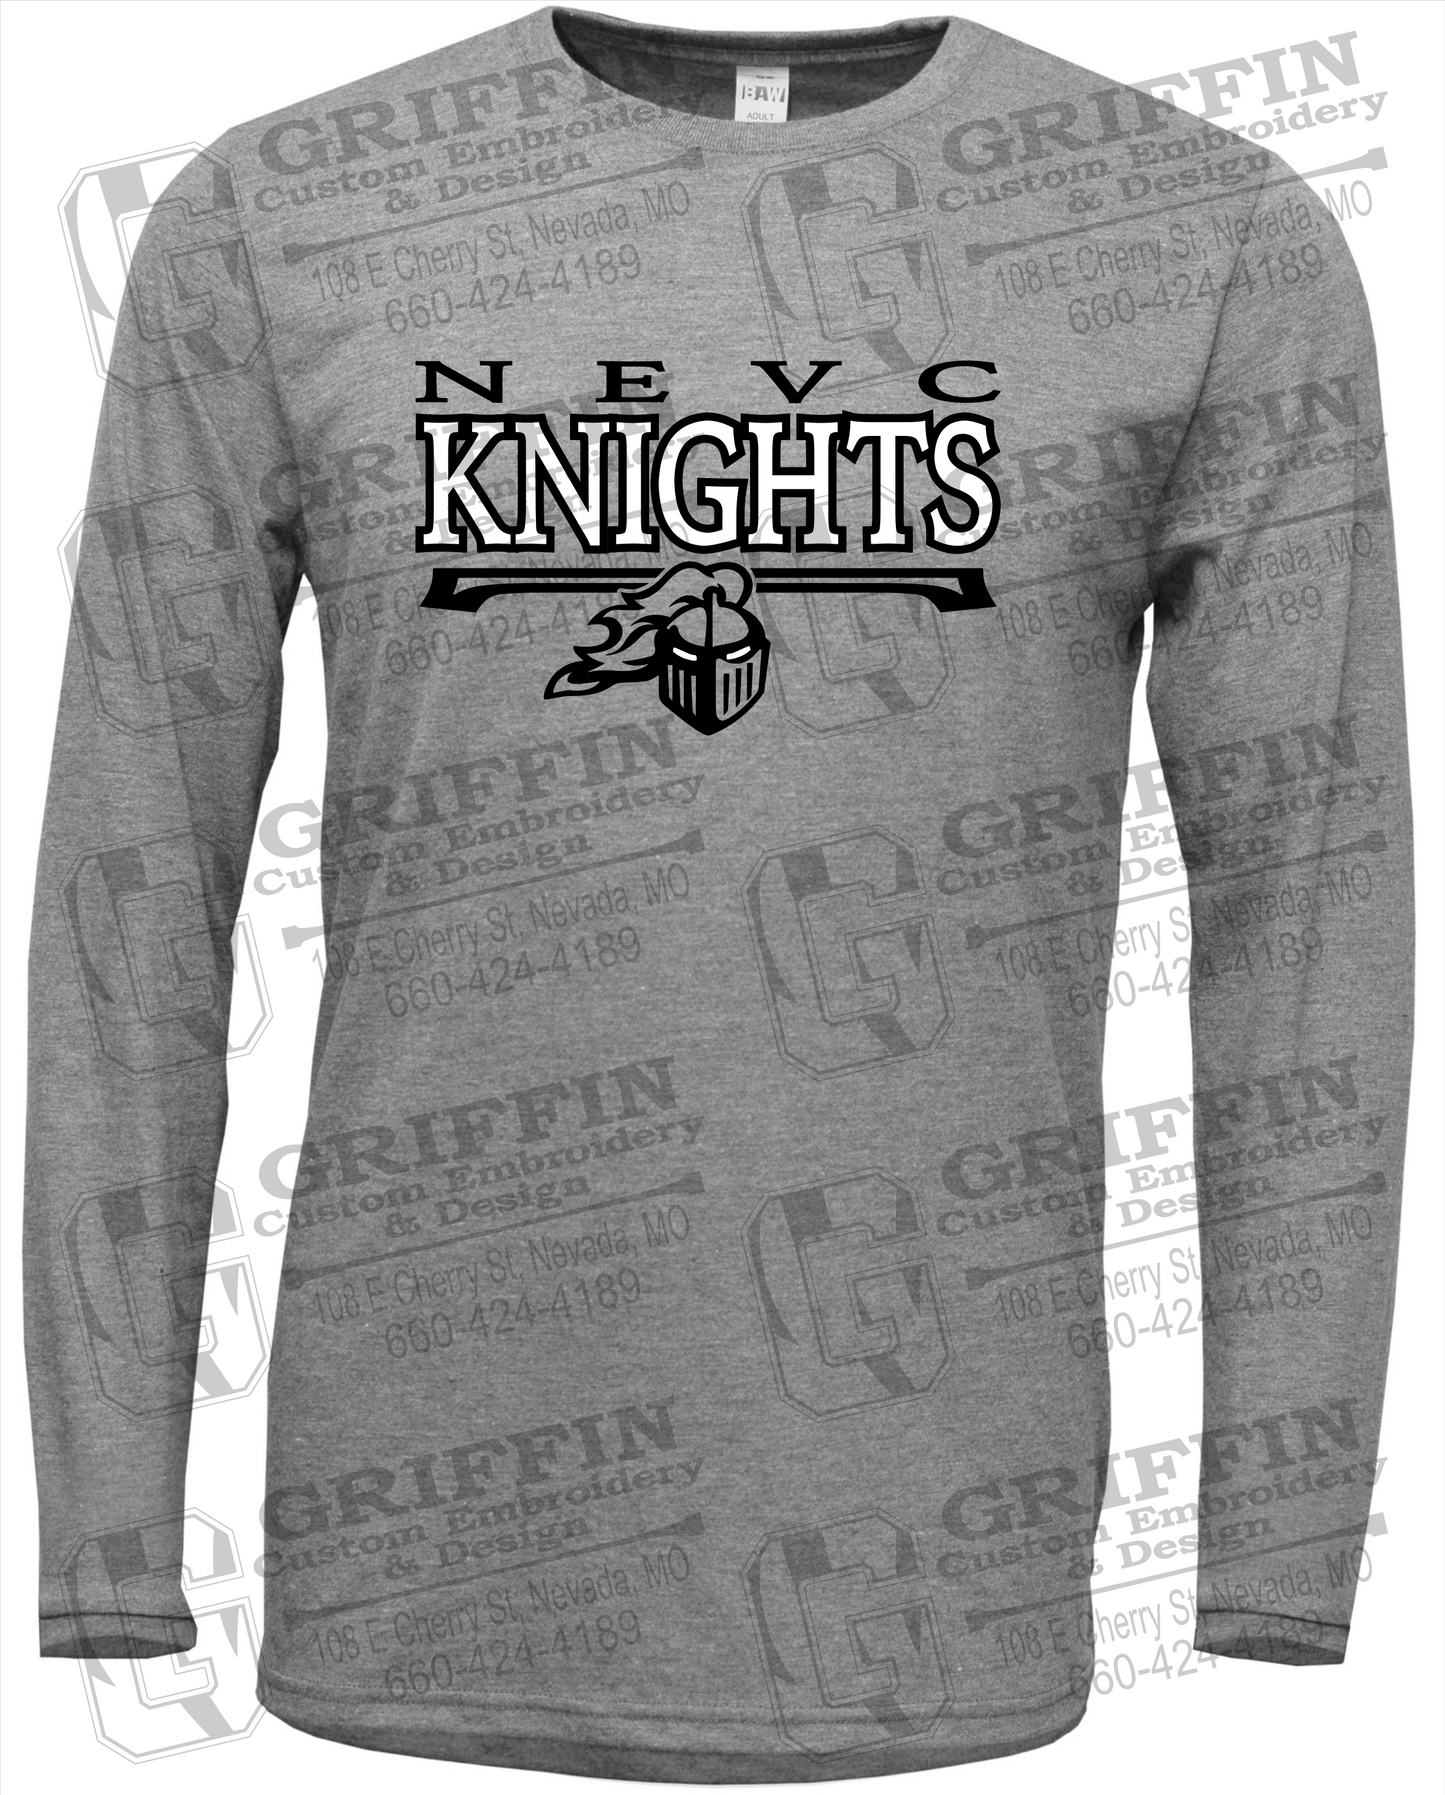 NEVC Knights 23-A Long Sleeve T-Shirt